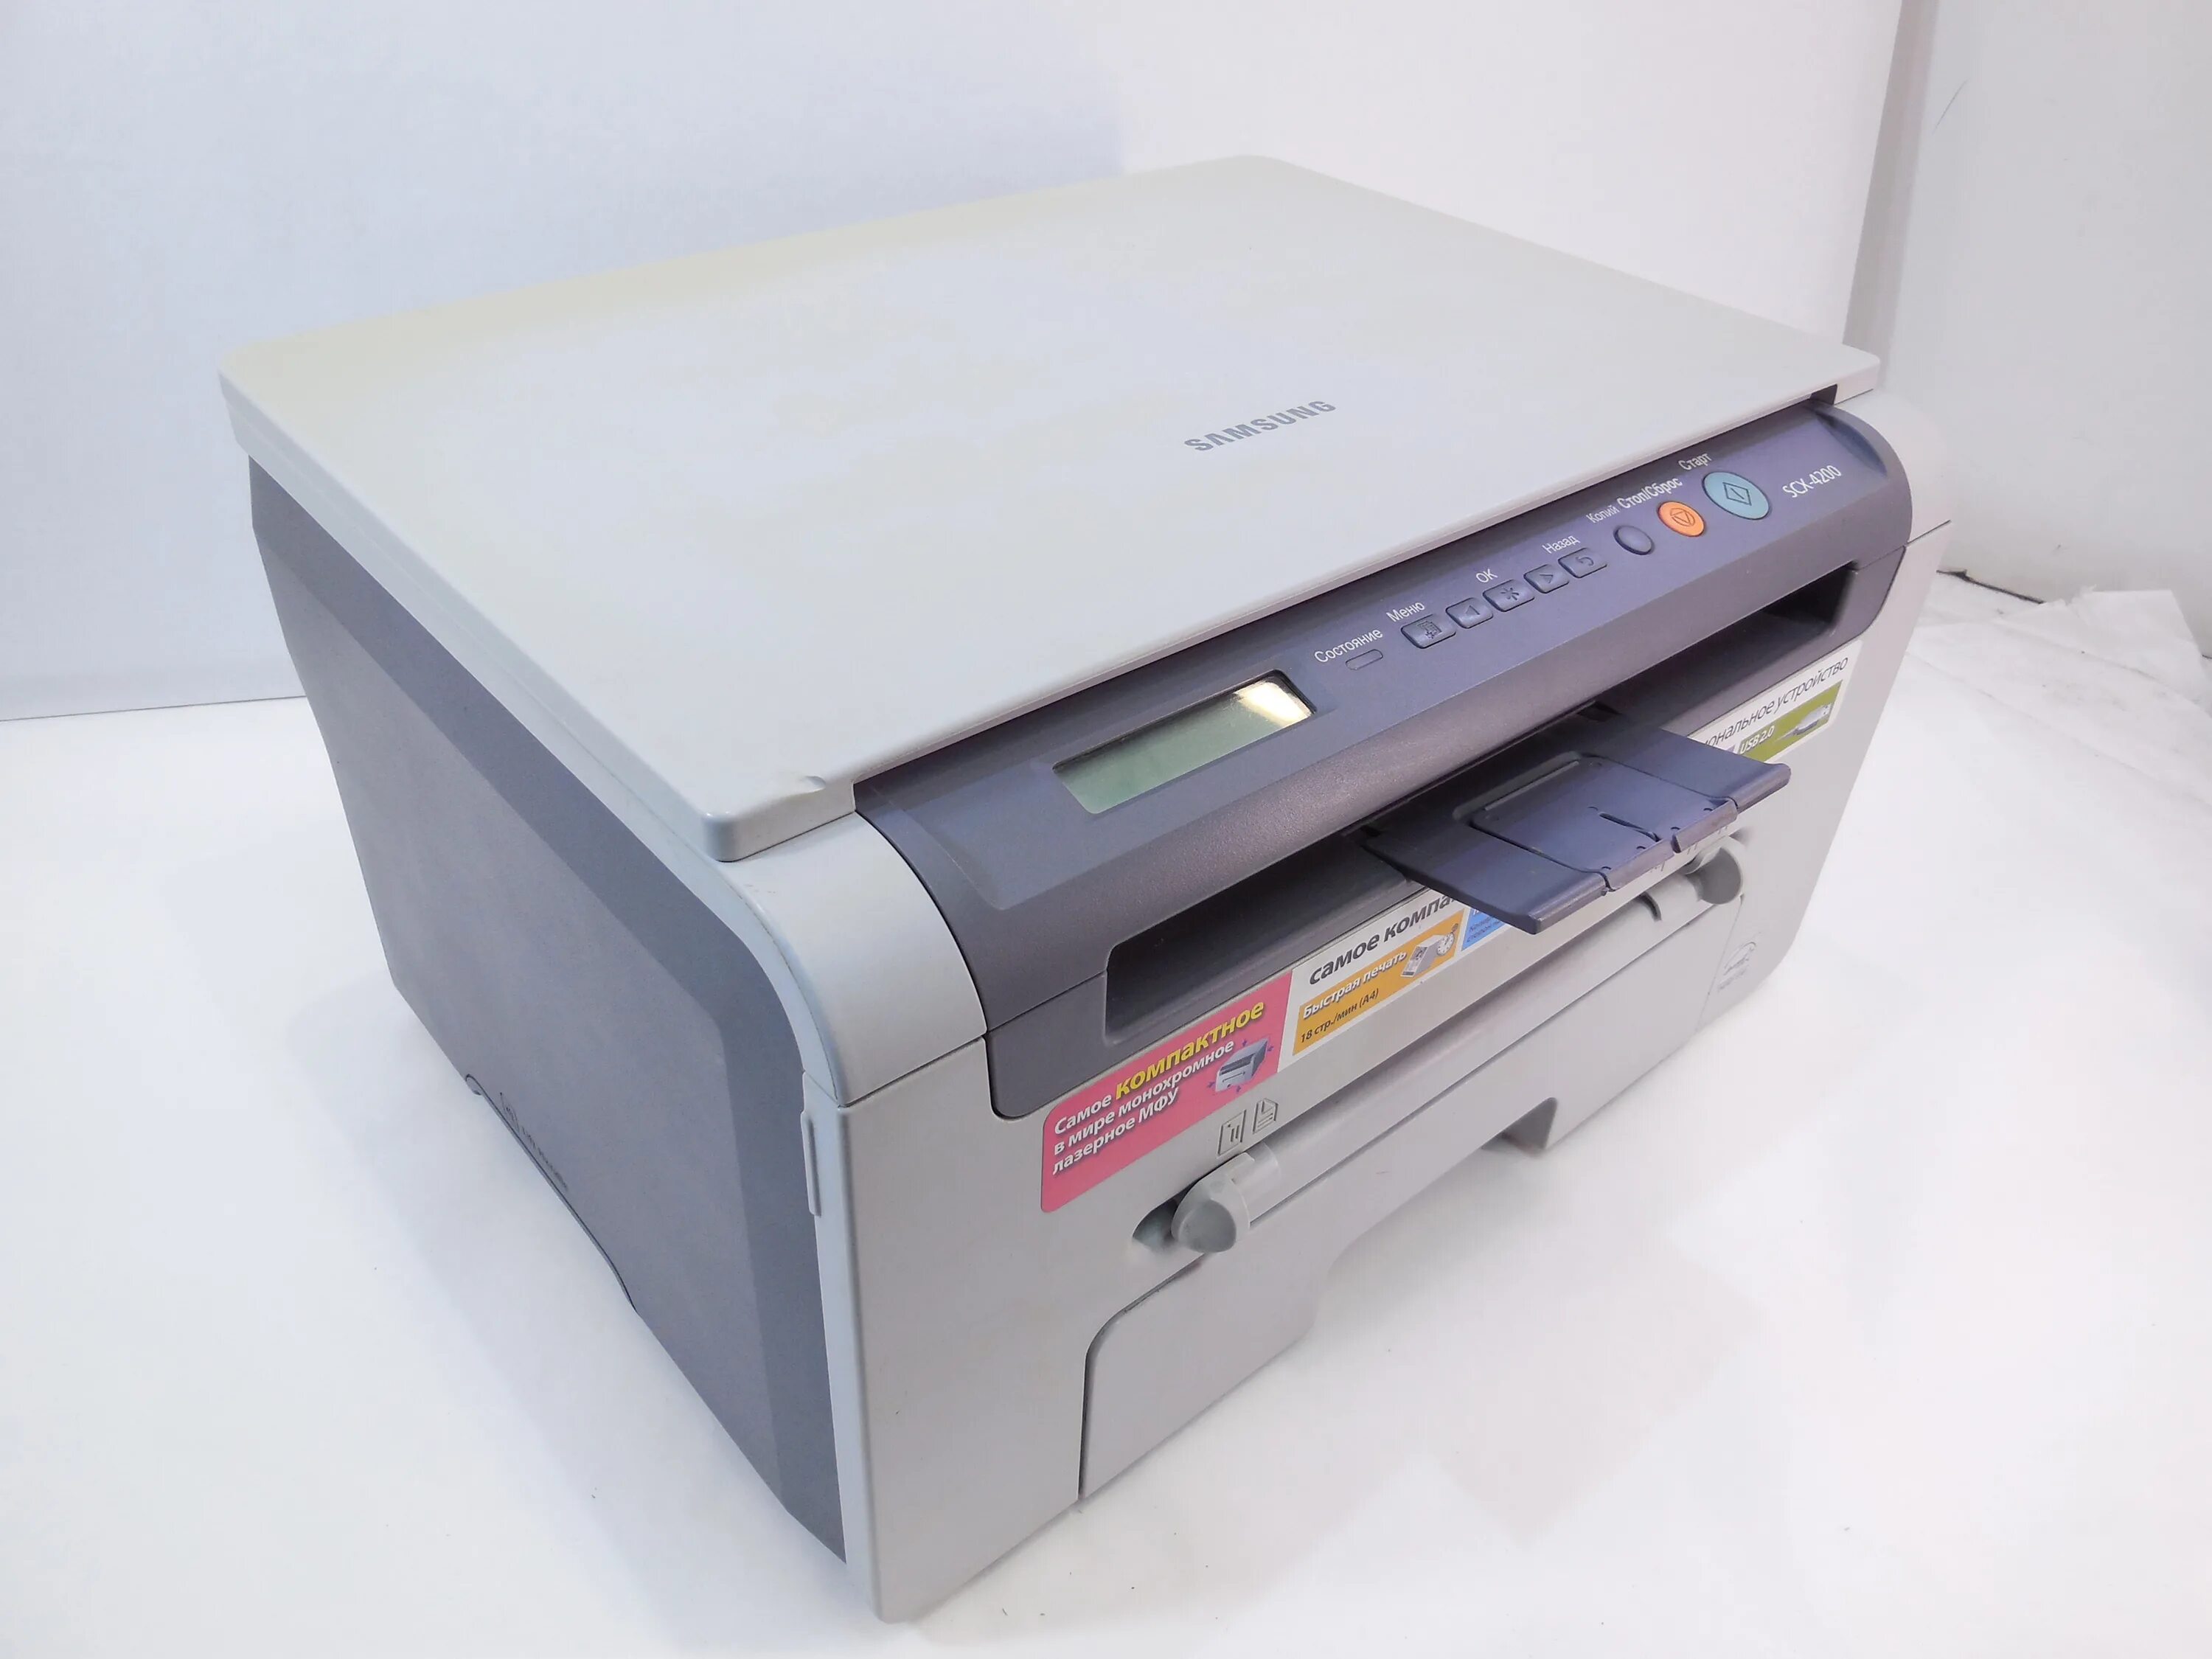 МФУ Samsung SCX-4200. Лазерный принтер самсунг 4200. Принтер сканер копир Samsung SCX 4200. Самсунг принтер МФУ 4200. Samsung scx 4200 series